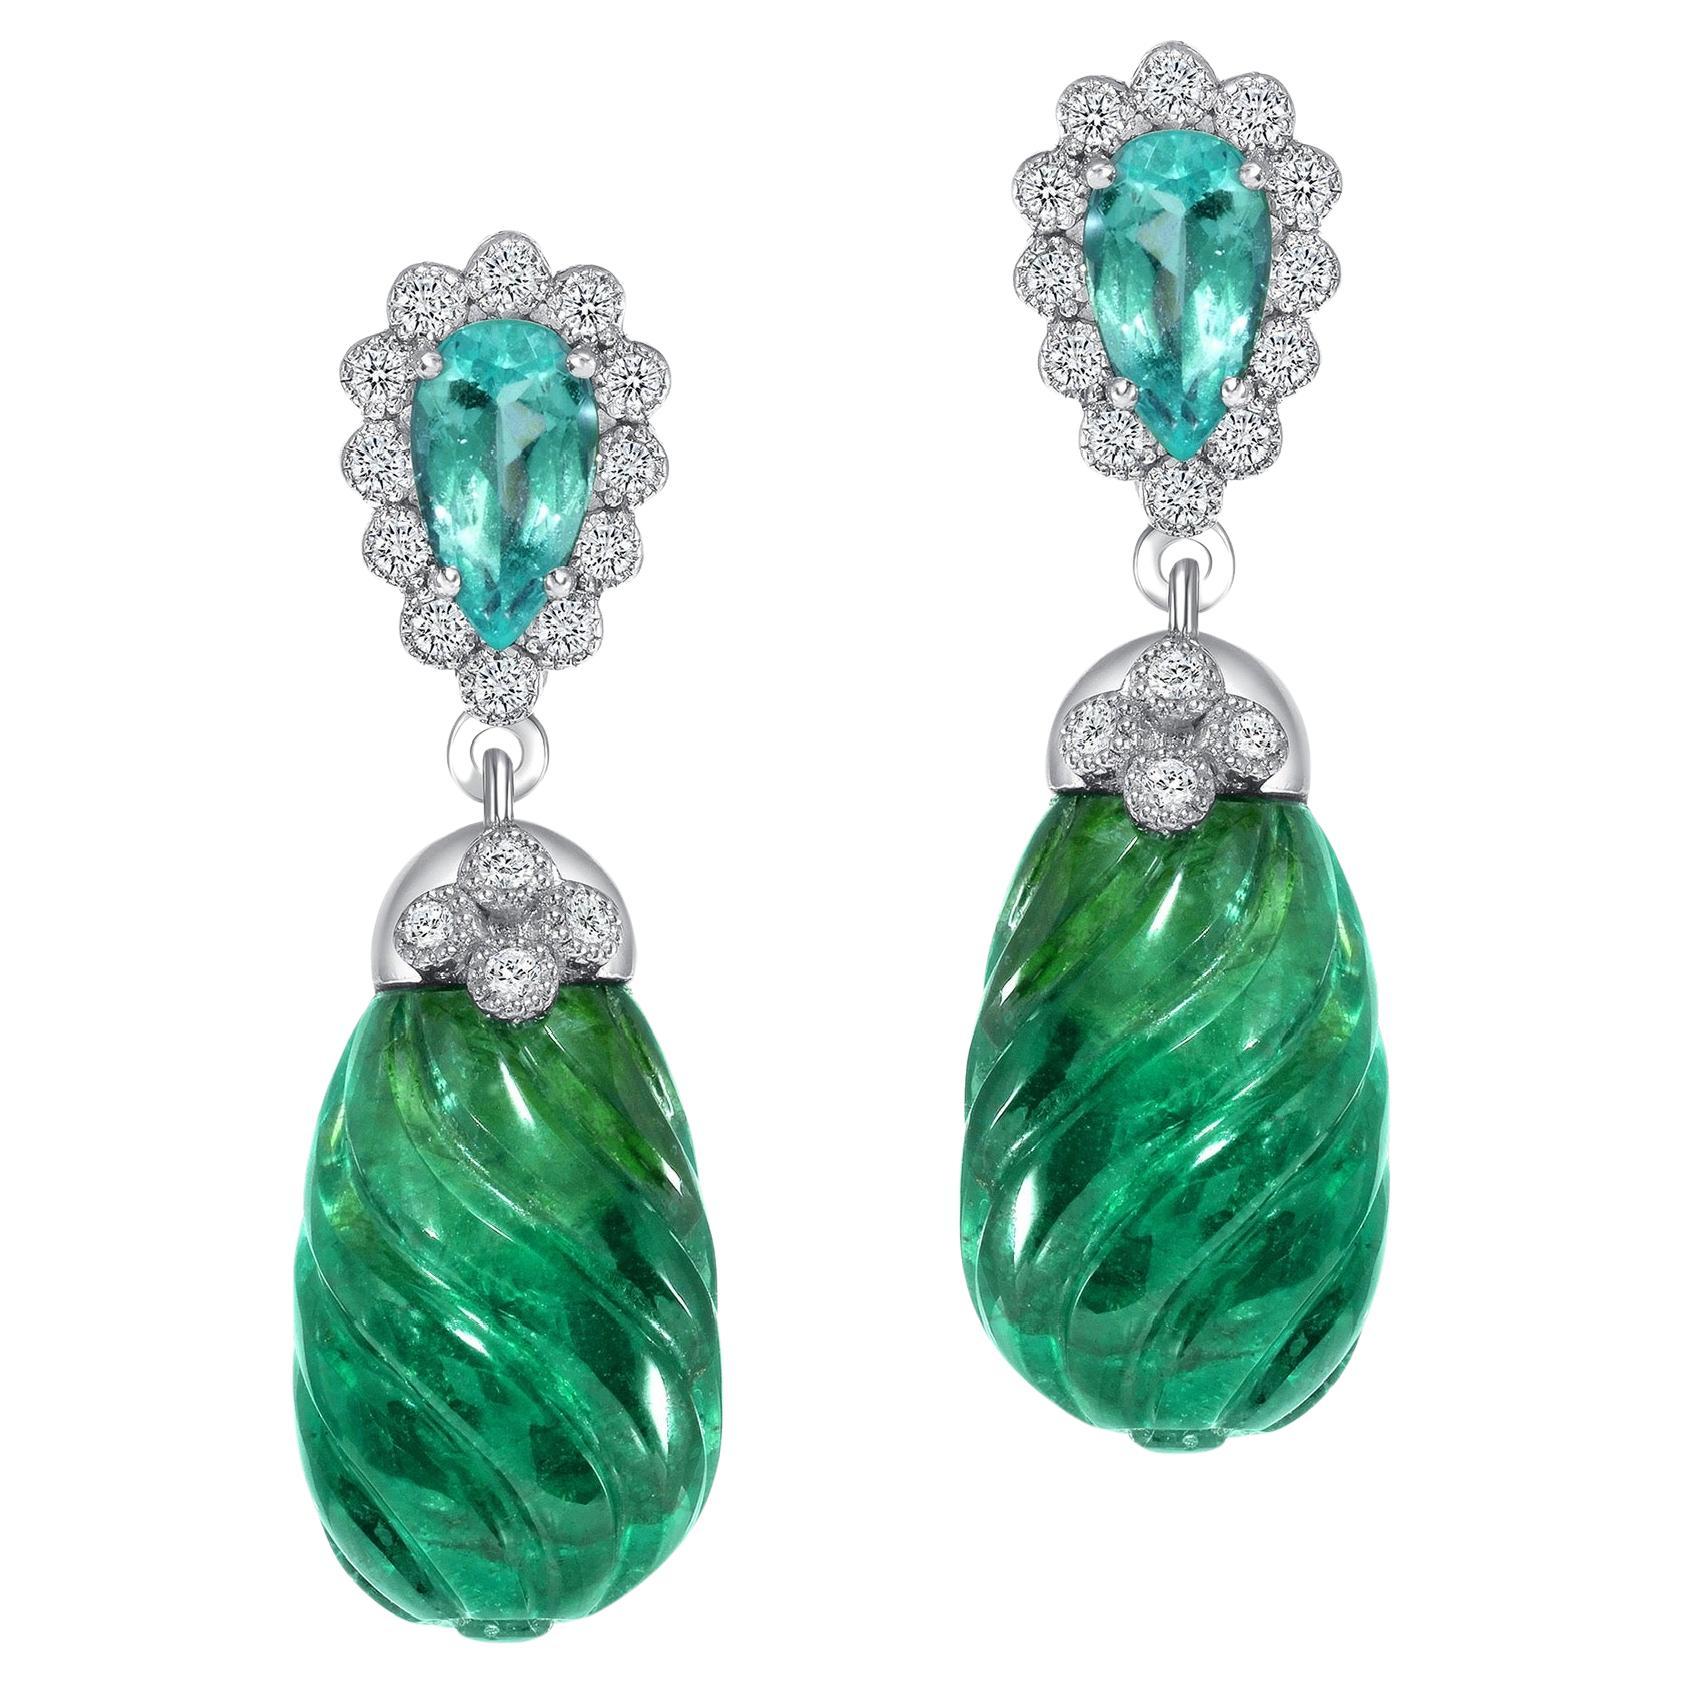 20.77ct Emeralds and 0.71ct Paraiba-type Tourmaline earrings.